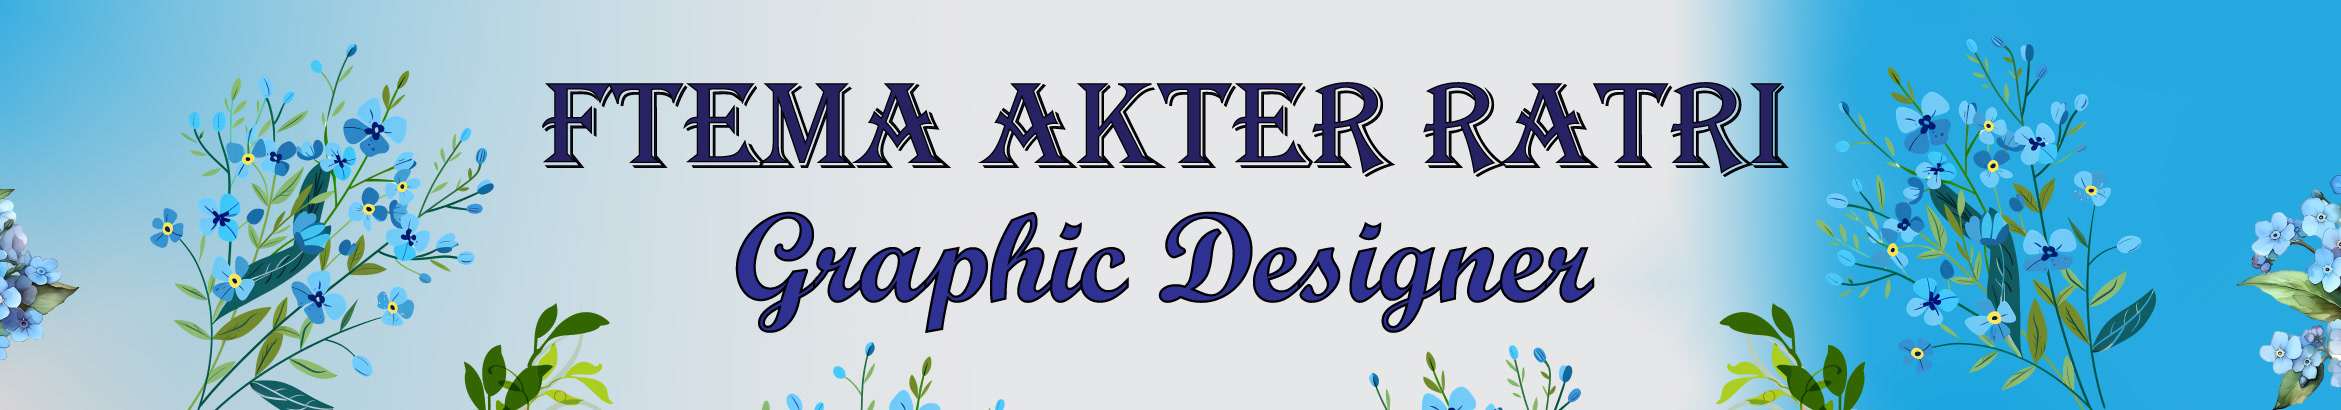 Fatema Akter Ratri's profile banner